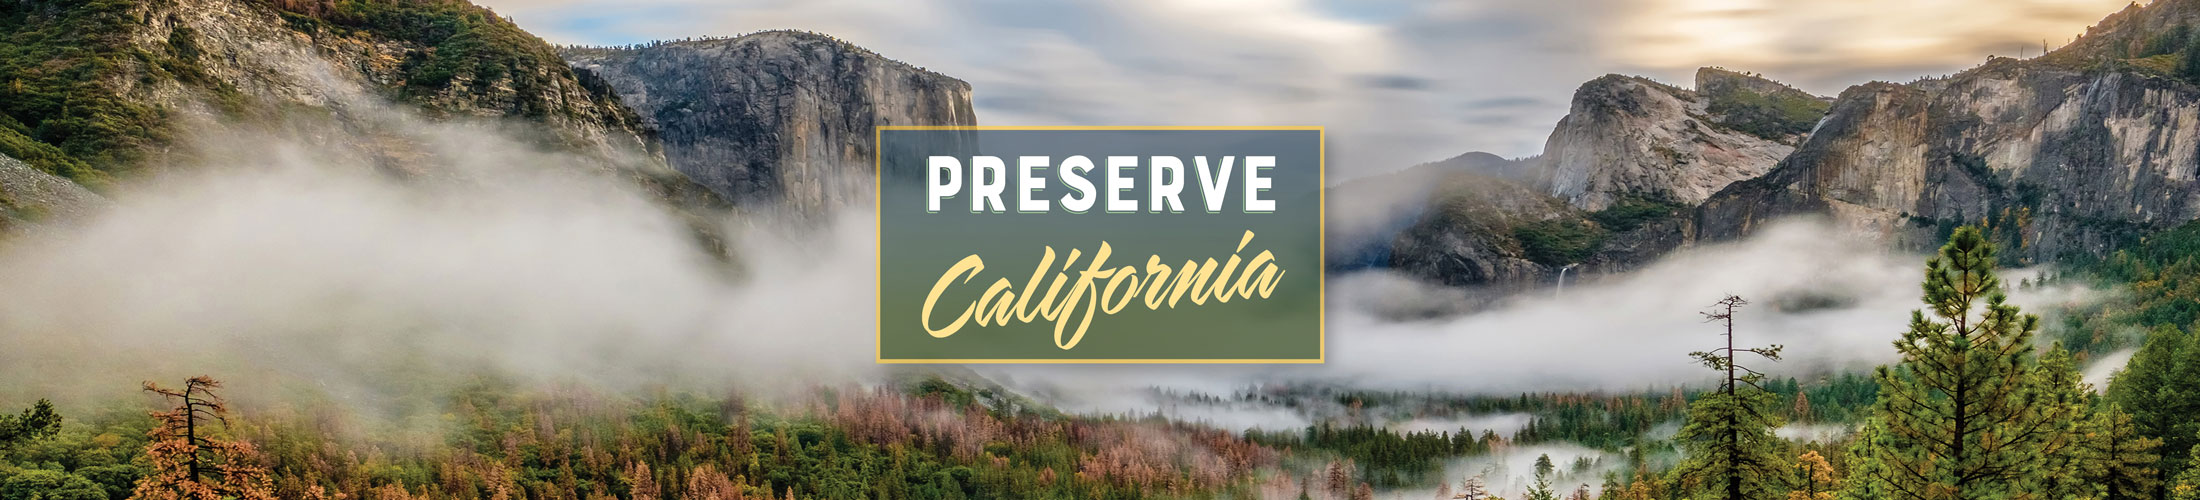 Preserve California Banner